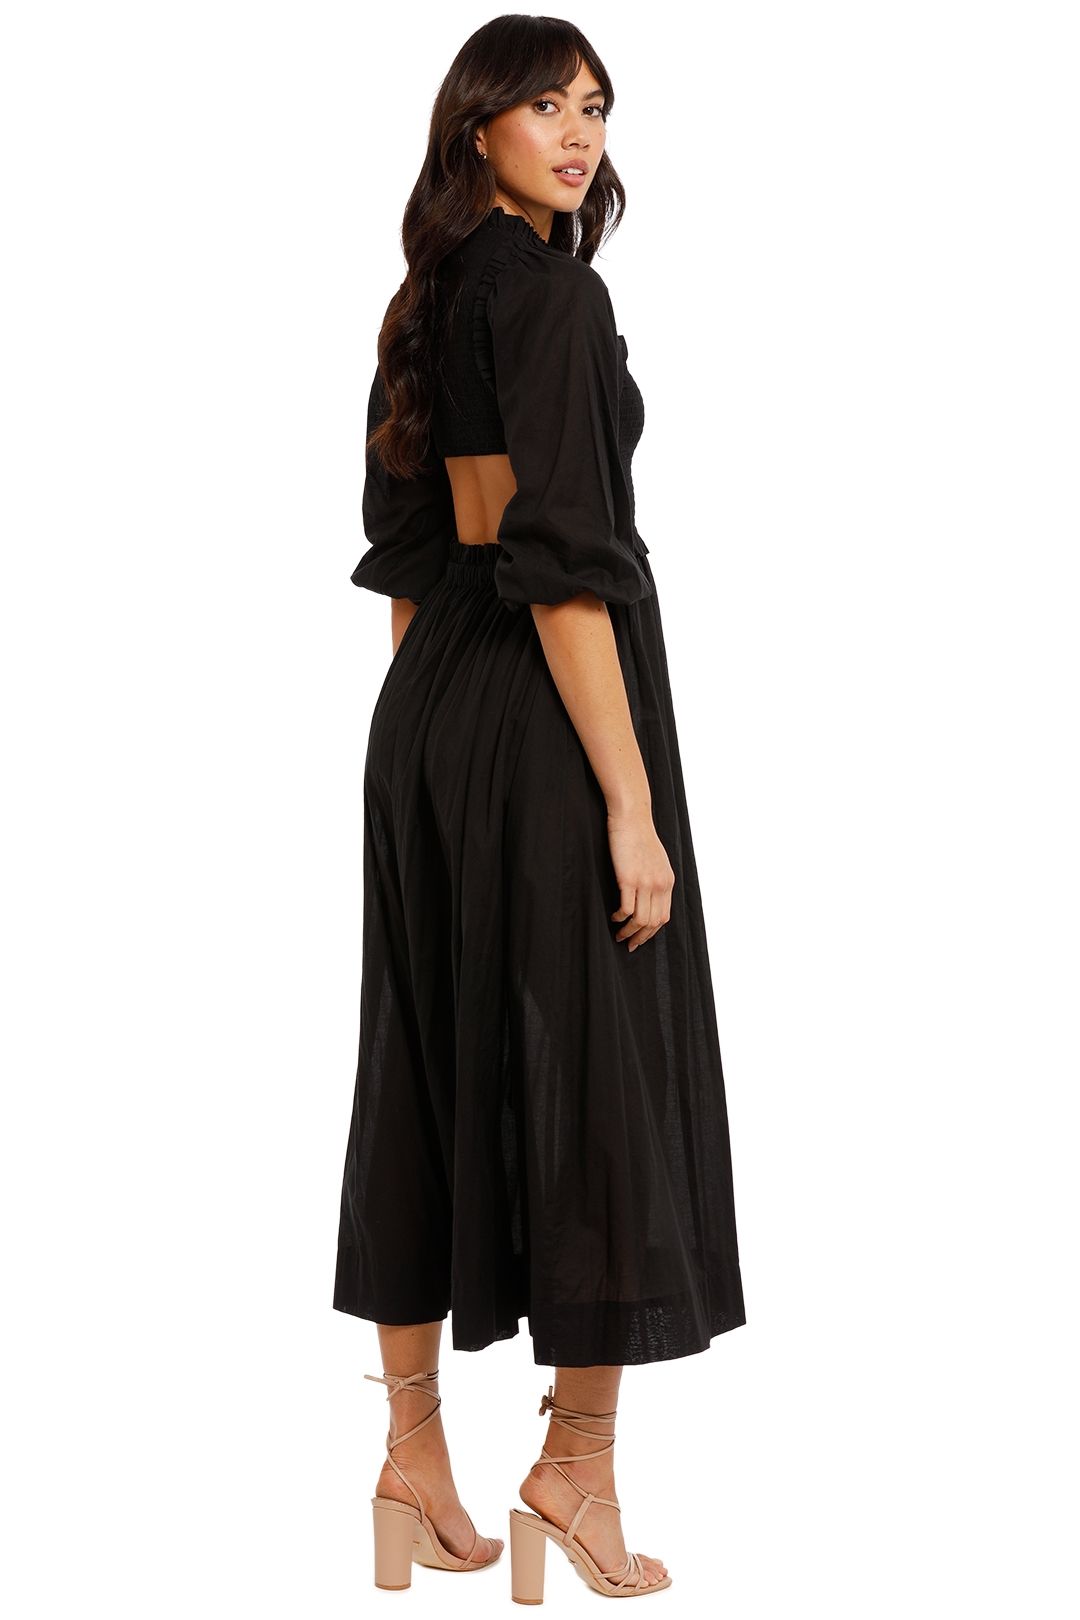 Bec and Bridge Willow Canyon Midi Dress Black Full Skirt